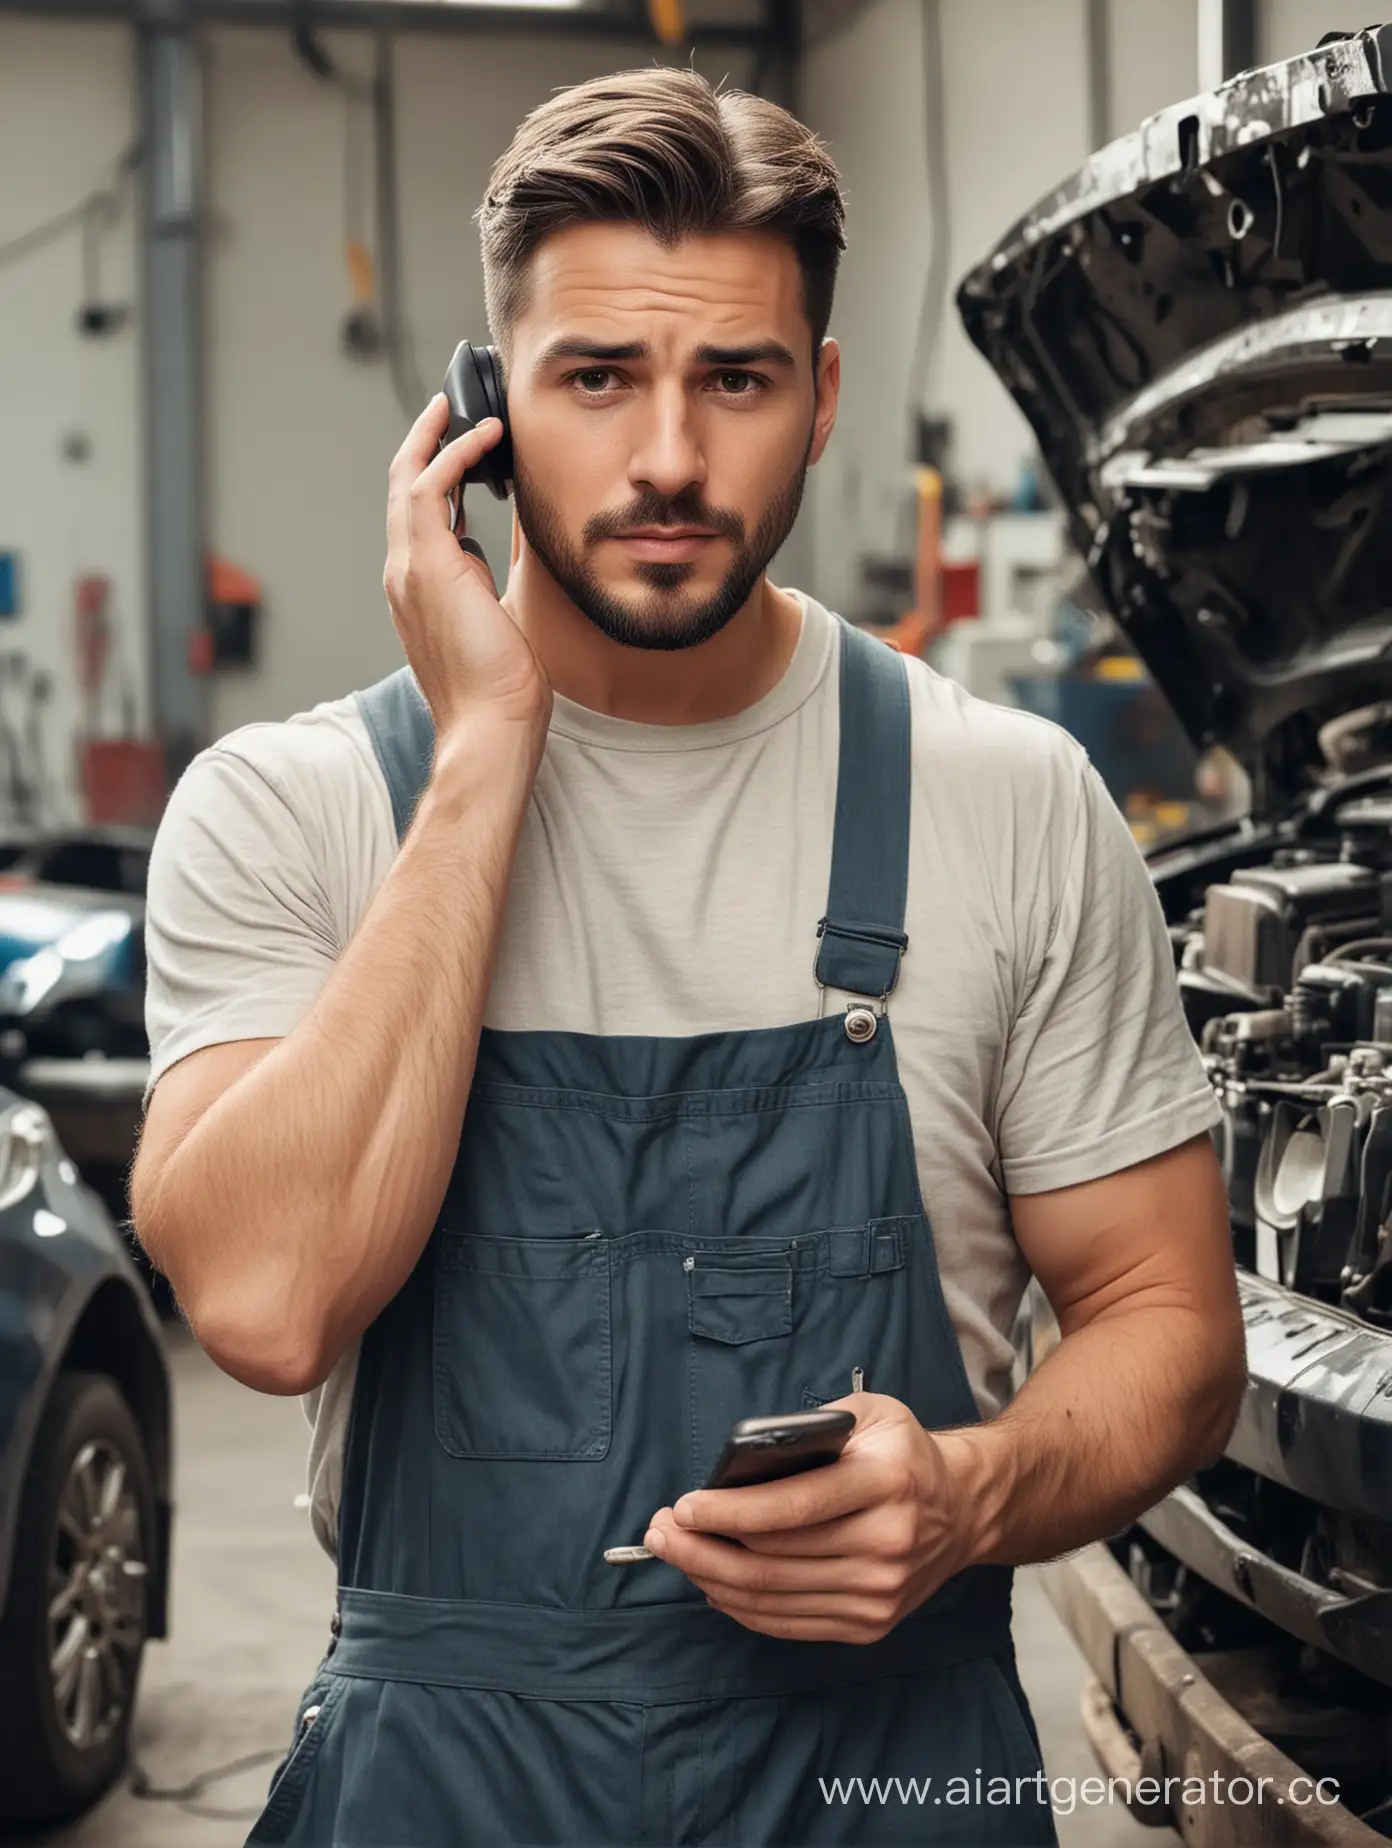 Focused-Car-Mechanic-Making-a-Phone-Call